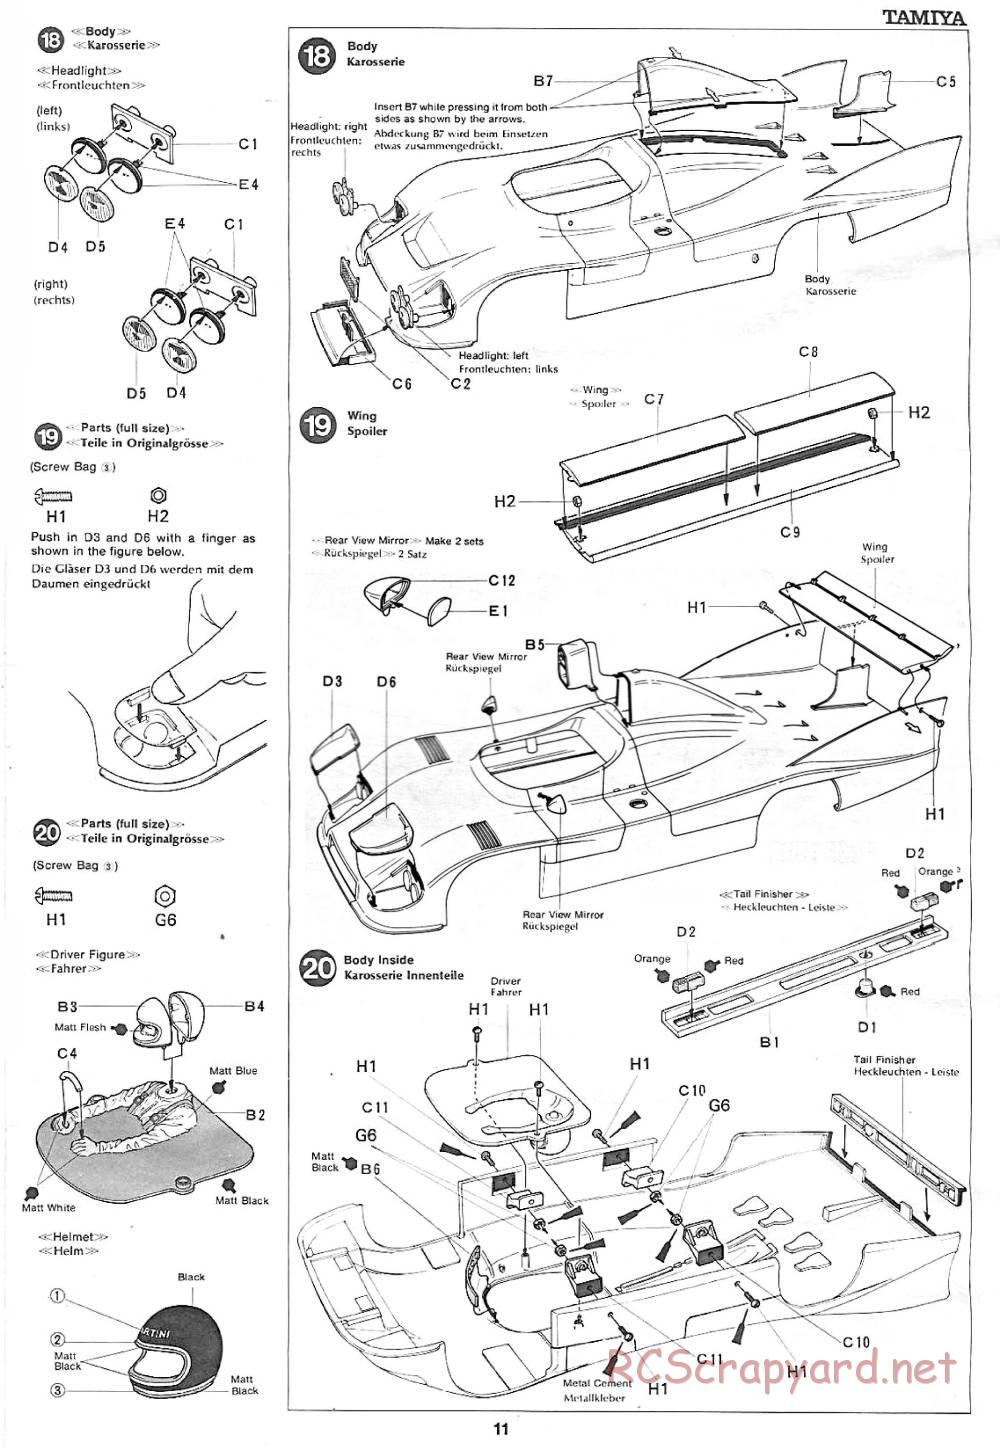 Tamiya - Martini Porsche 936 Turbo - 58006 - Manual - Page 11